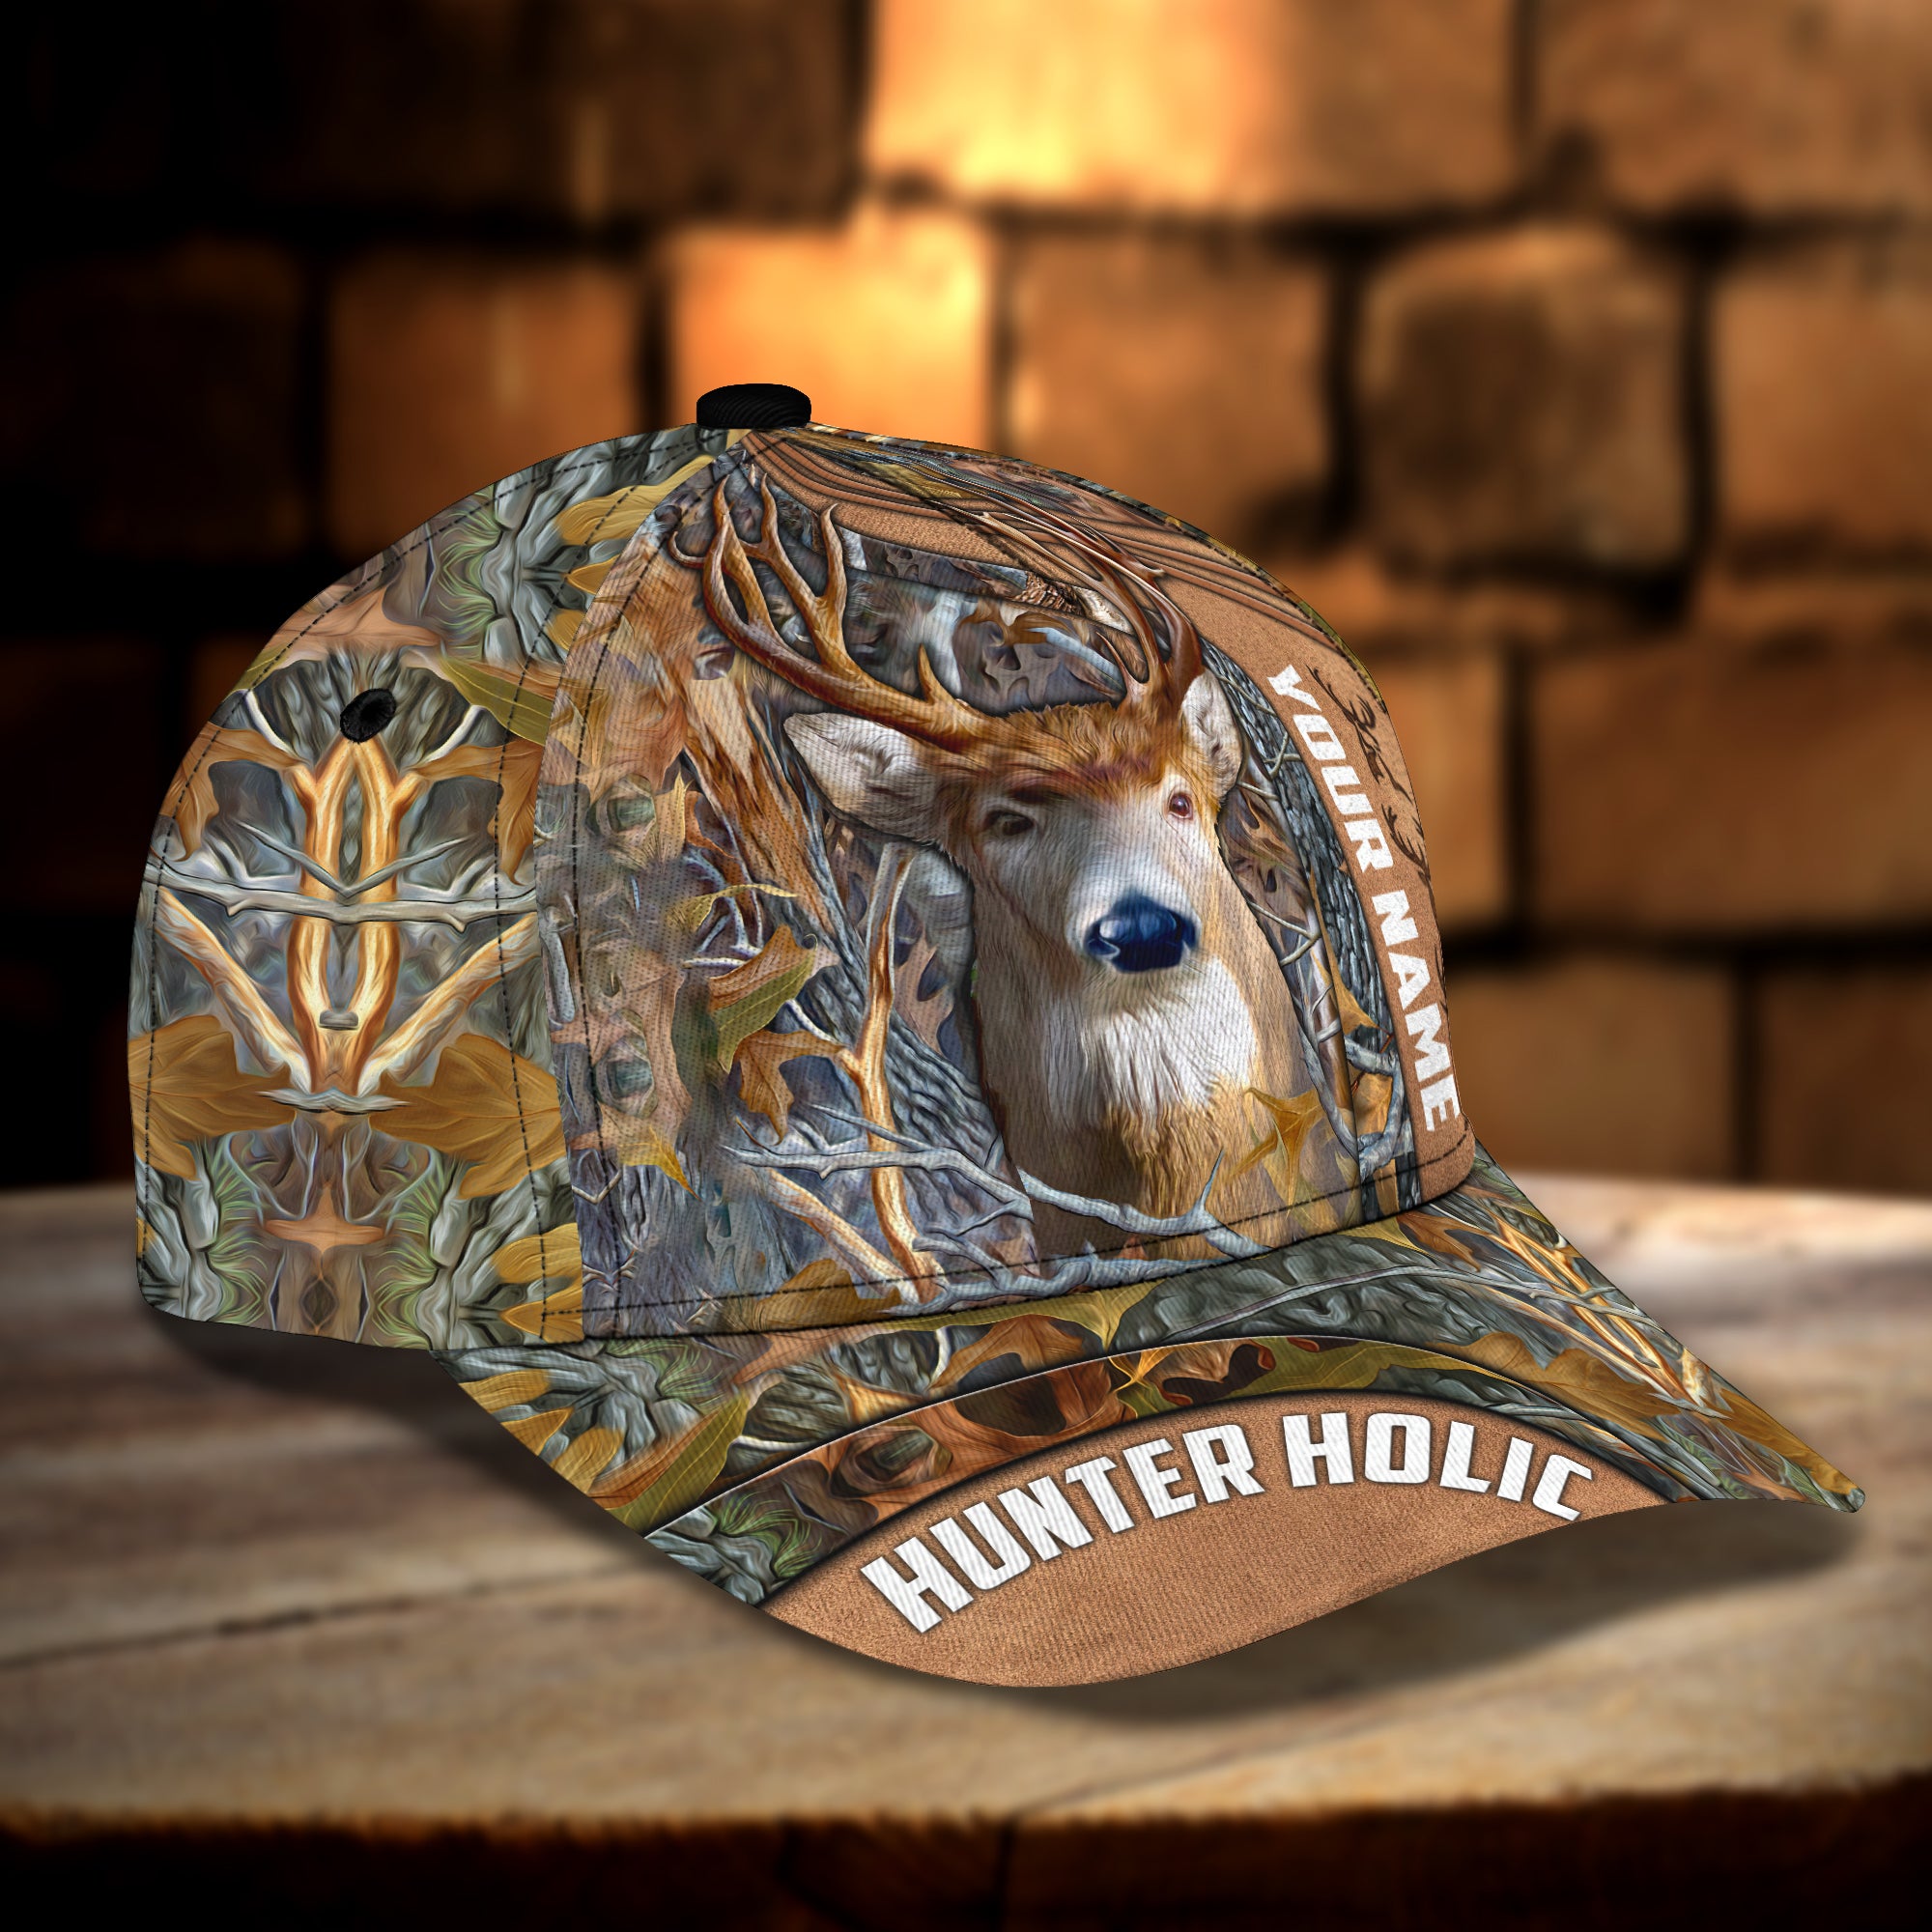 Hunter Holic - Personalized Name Cap -TT99-1191